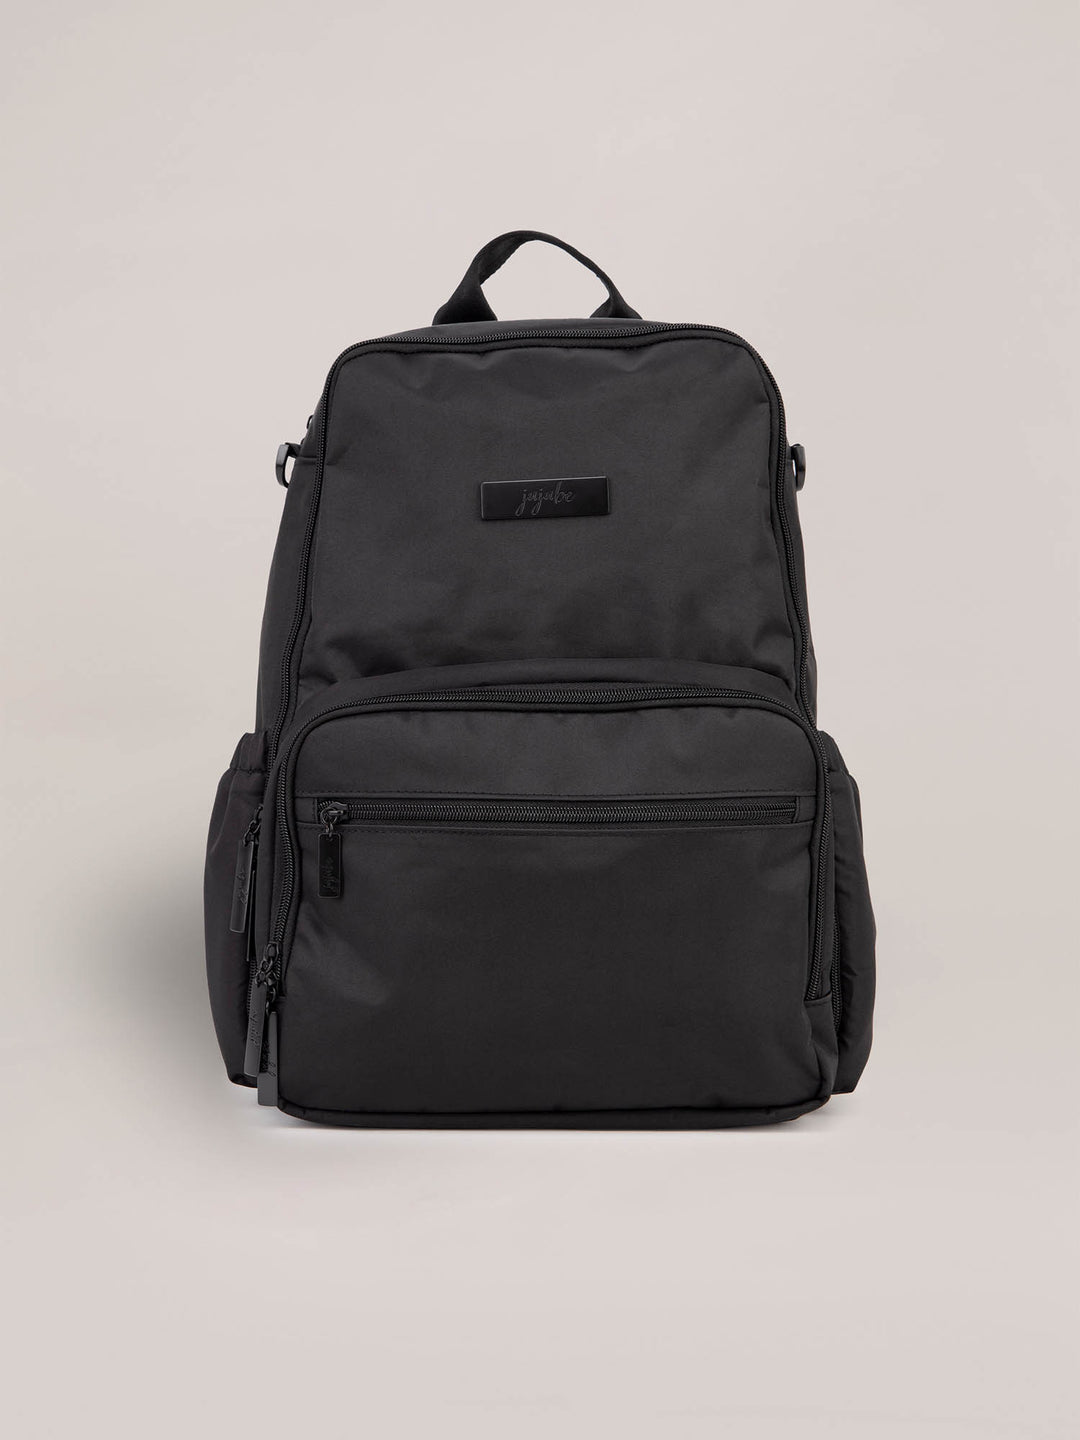 JuJuBe | Zealous Backpack - Black Out | Large Backpack | Unisex